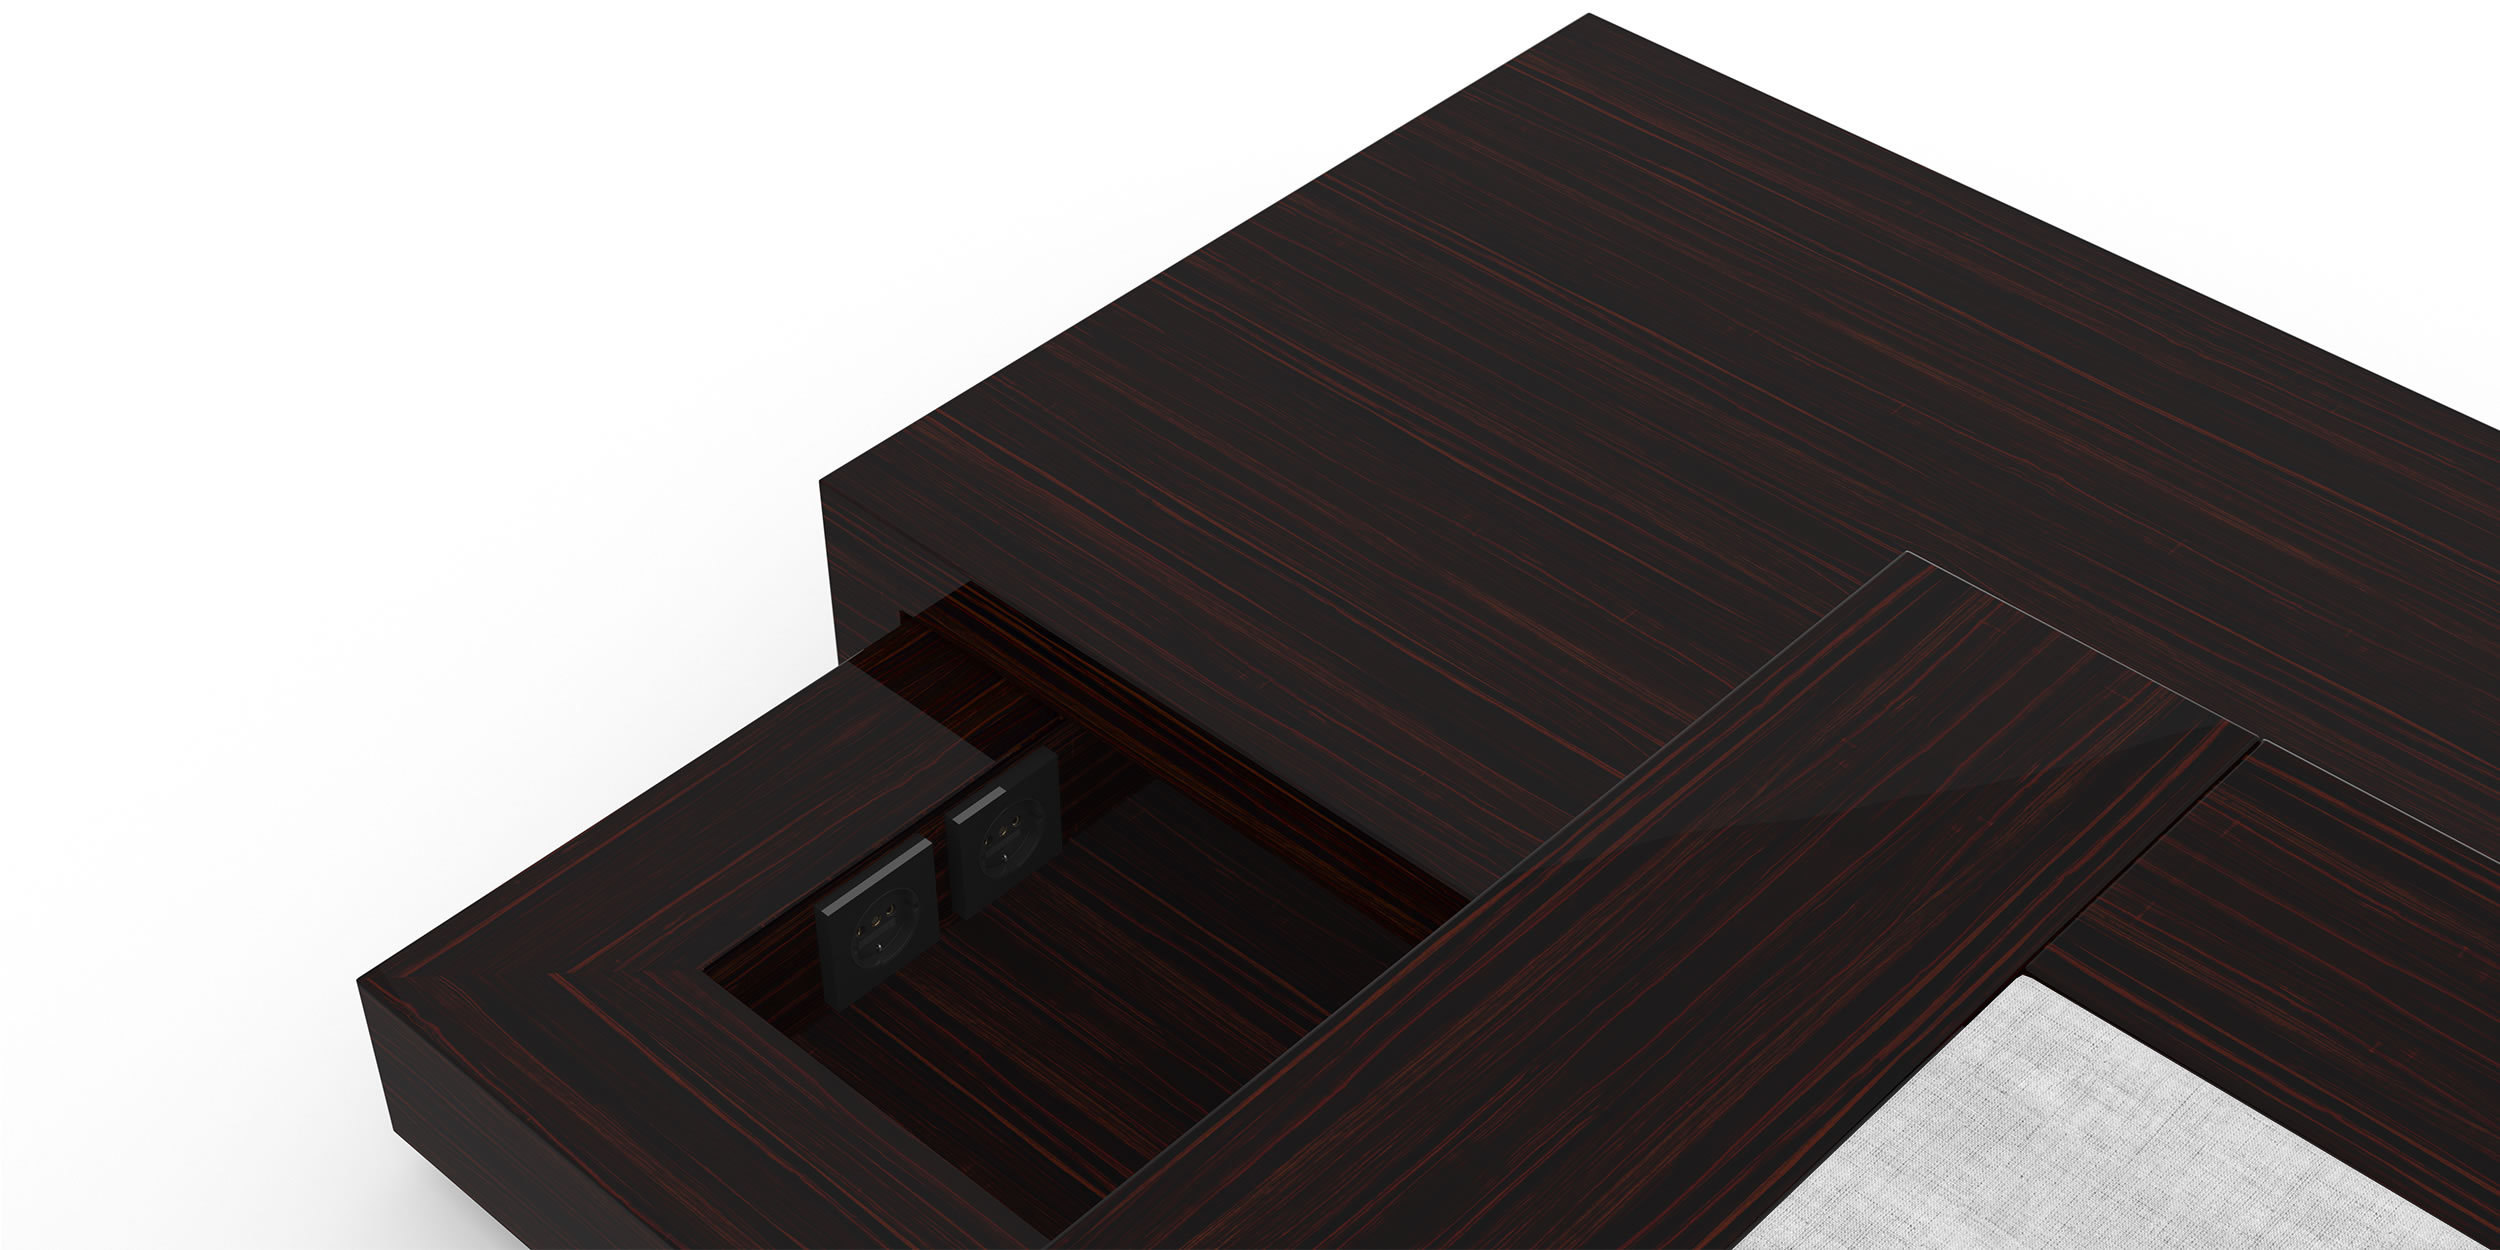 Design Bed Nightstand Drawer Makassar Ebony Refined Handcrafted Purist InteriorFELIX SCHWAKE